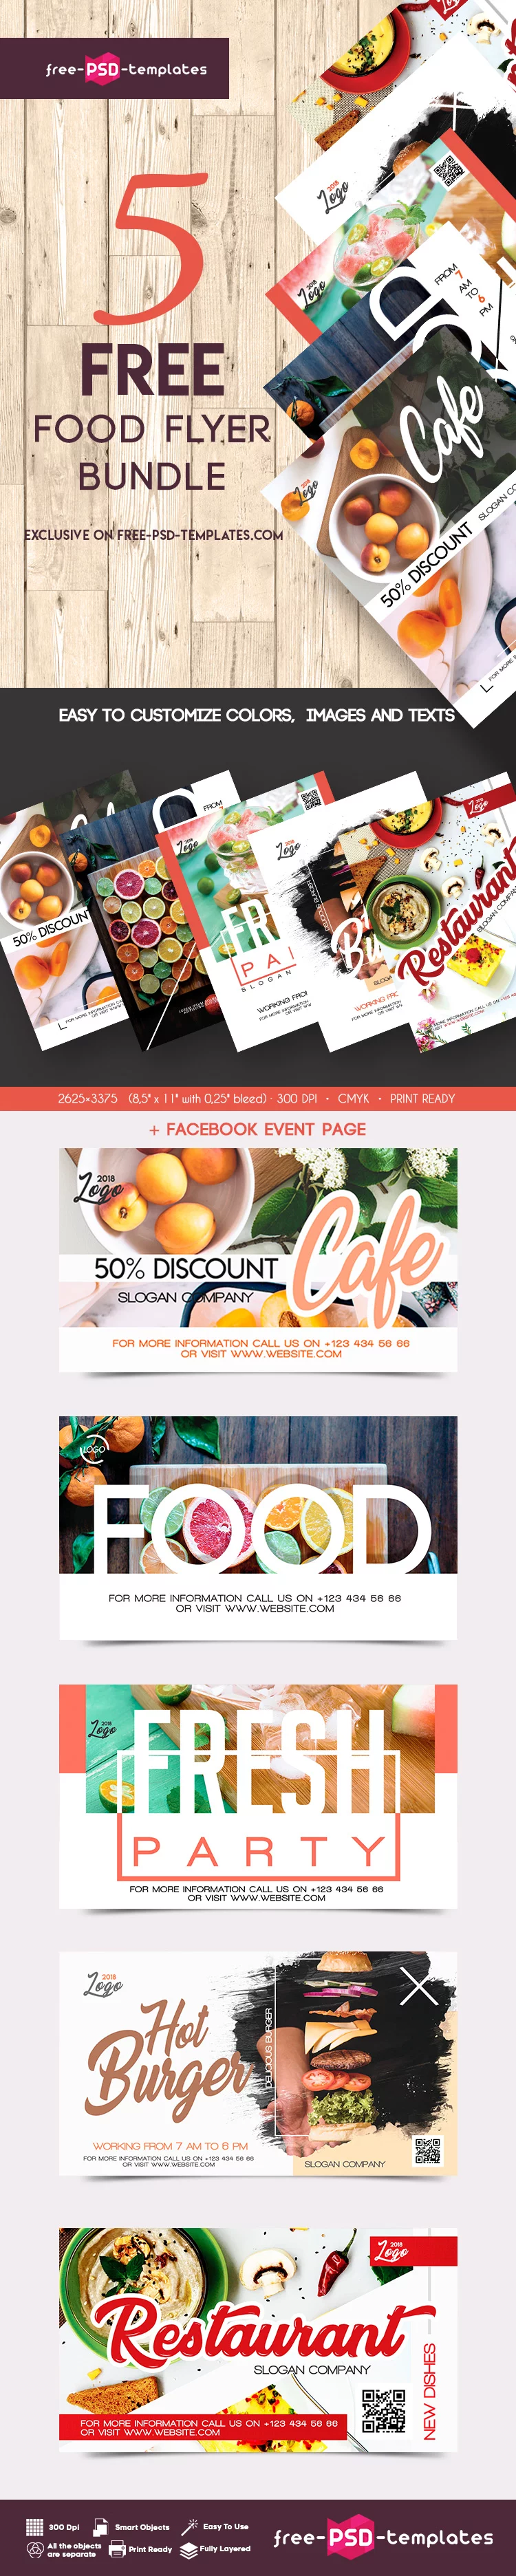 5 Free Food Flyer Bundle in PSD